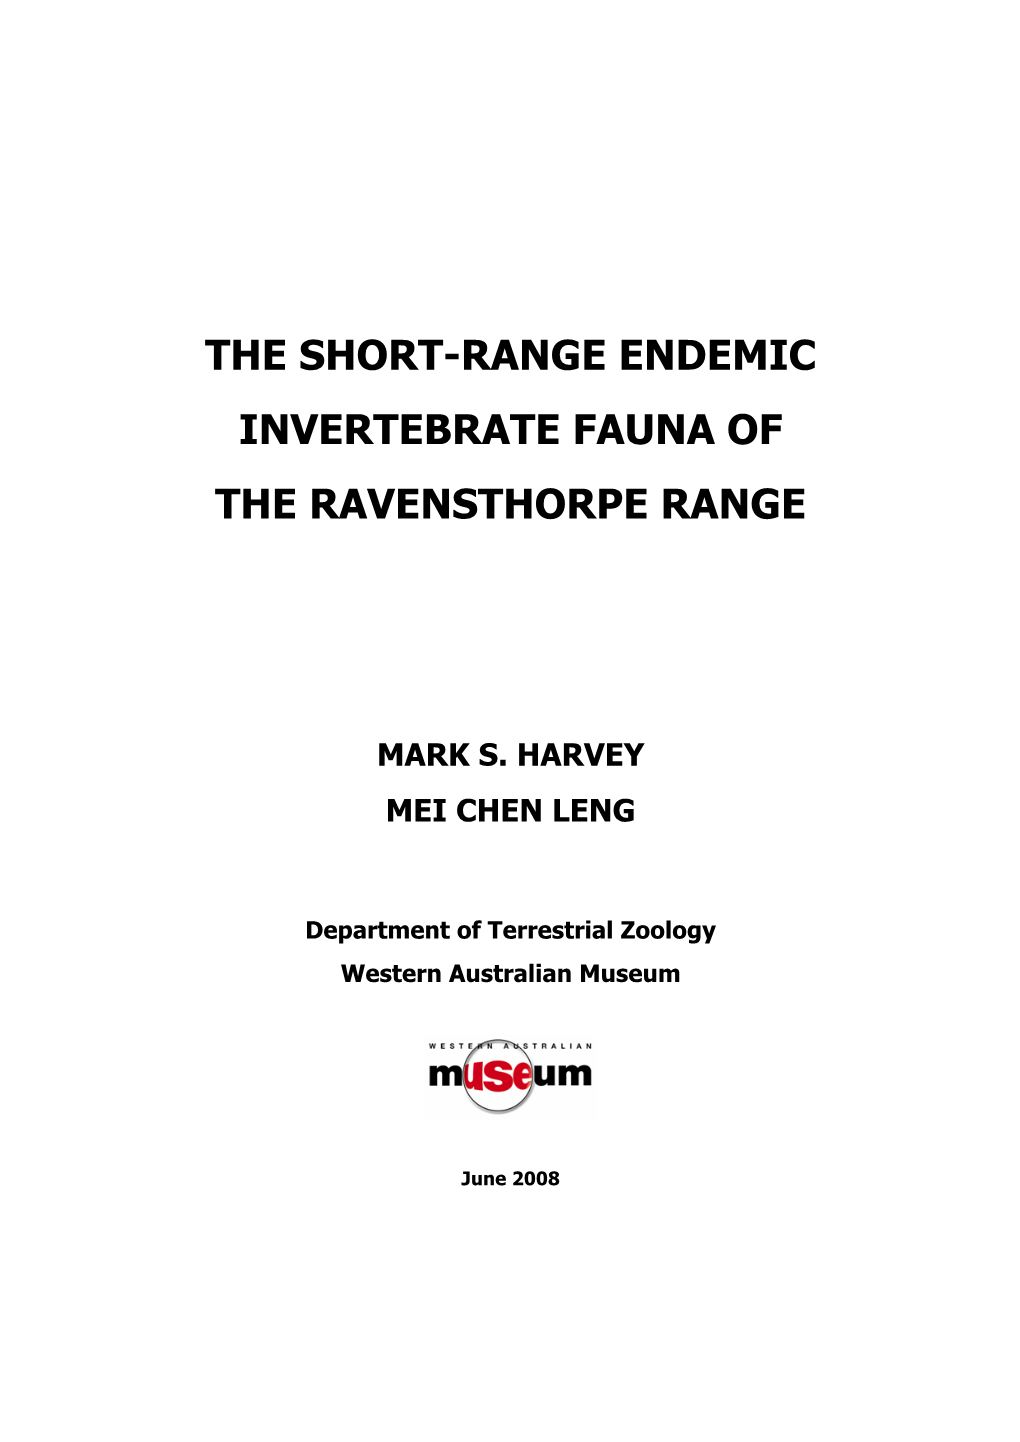 The Short-Range Endemic Invertebrate Fauna of the Ravensthorpe Range